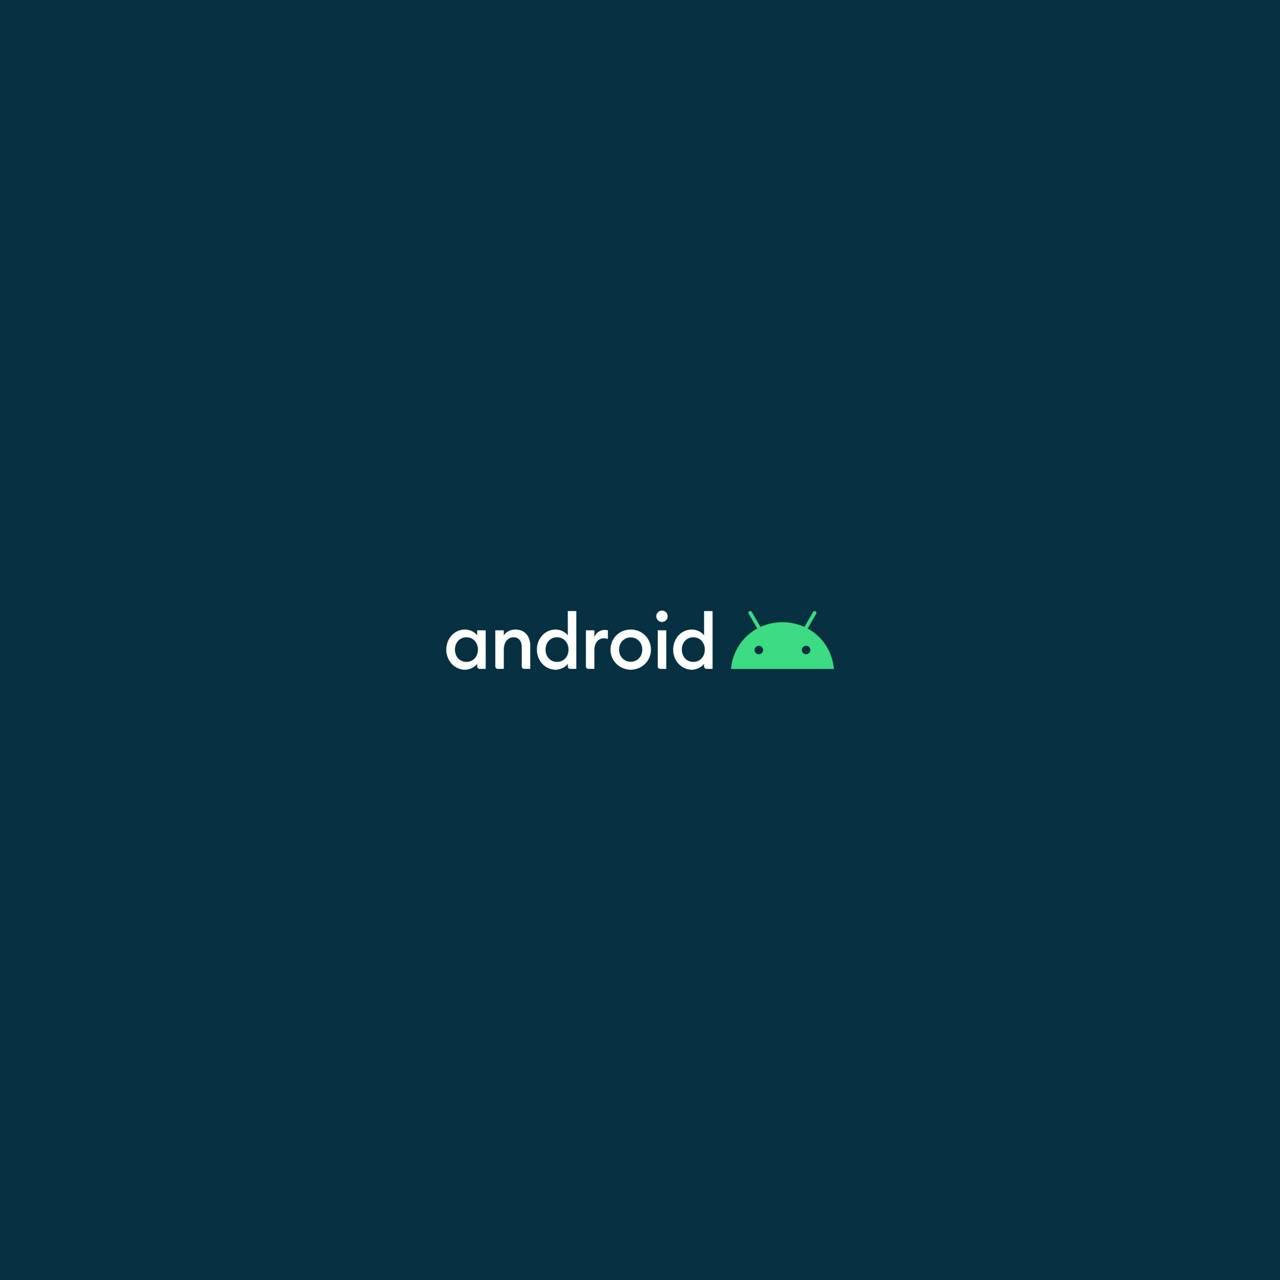 Android Developer Cropped Logo Wallpaper